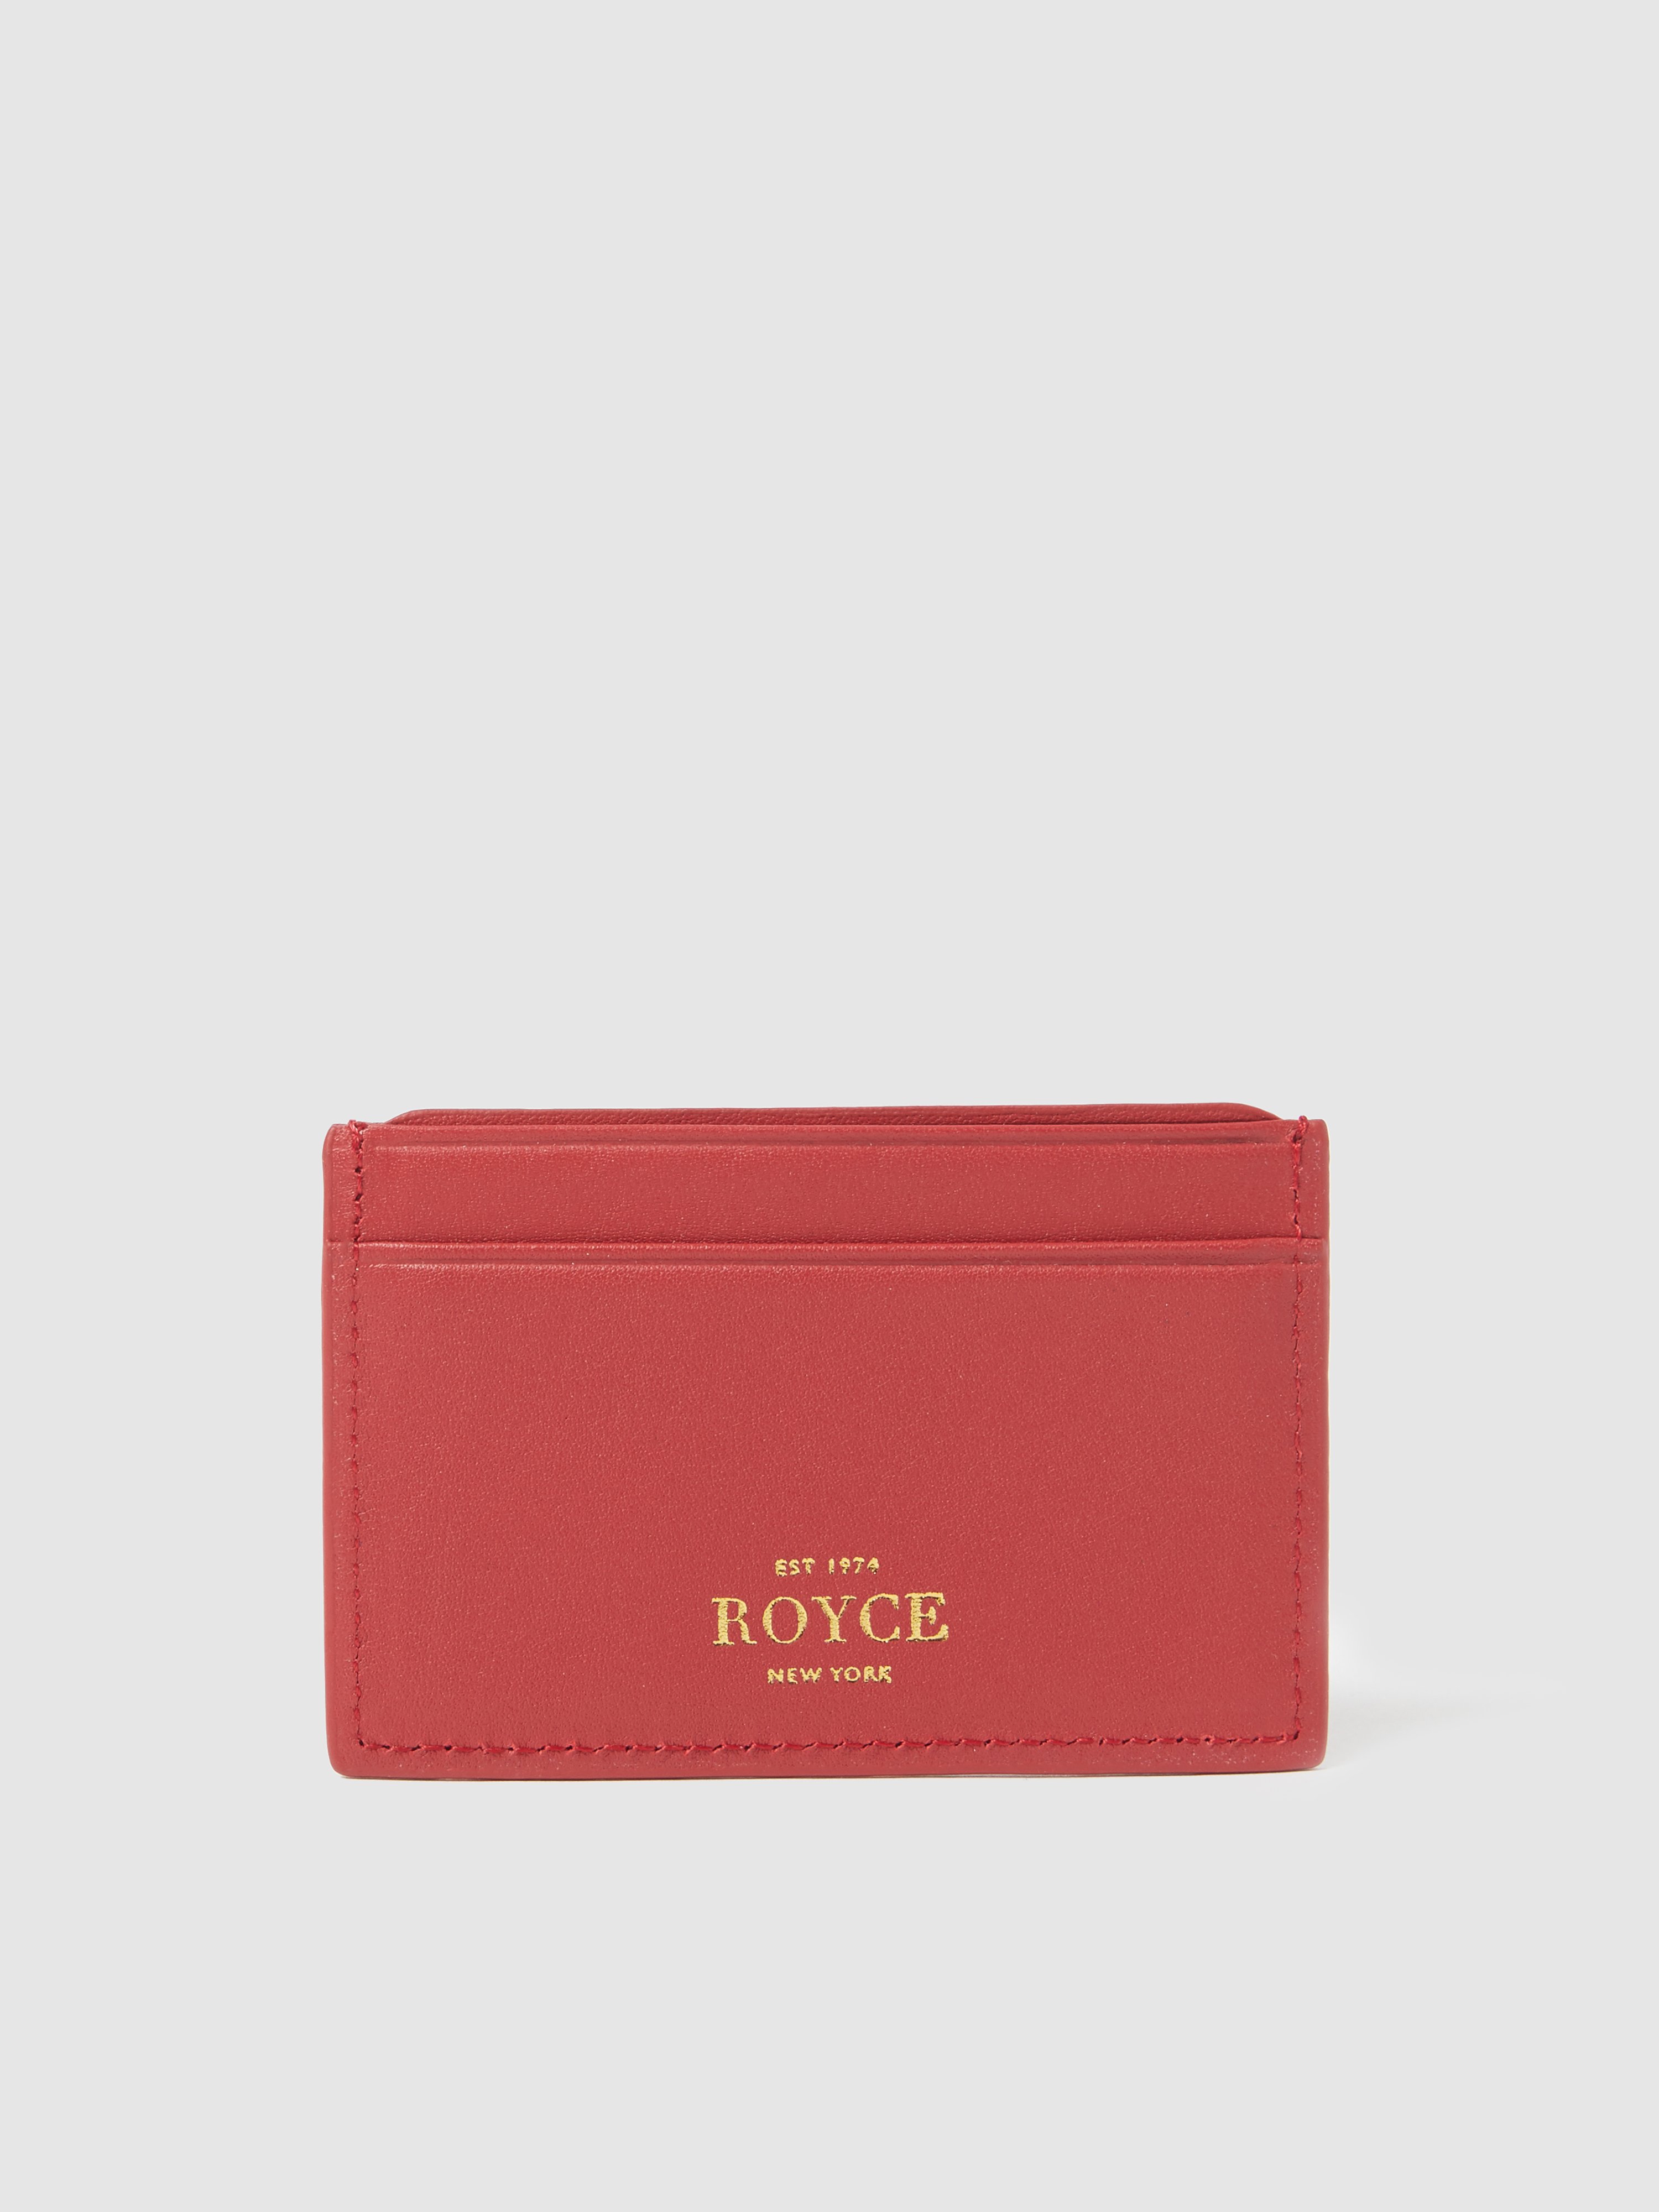 Royce New York Rfid Blocking Credit Card Holder In Red